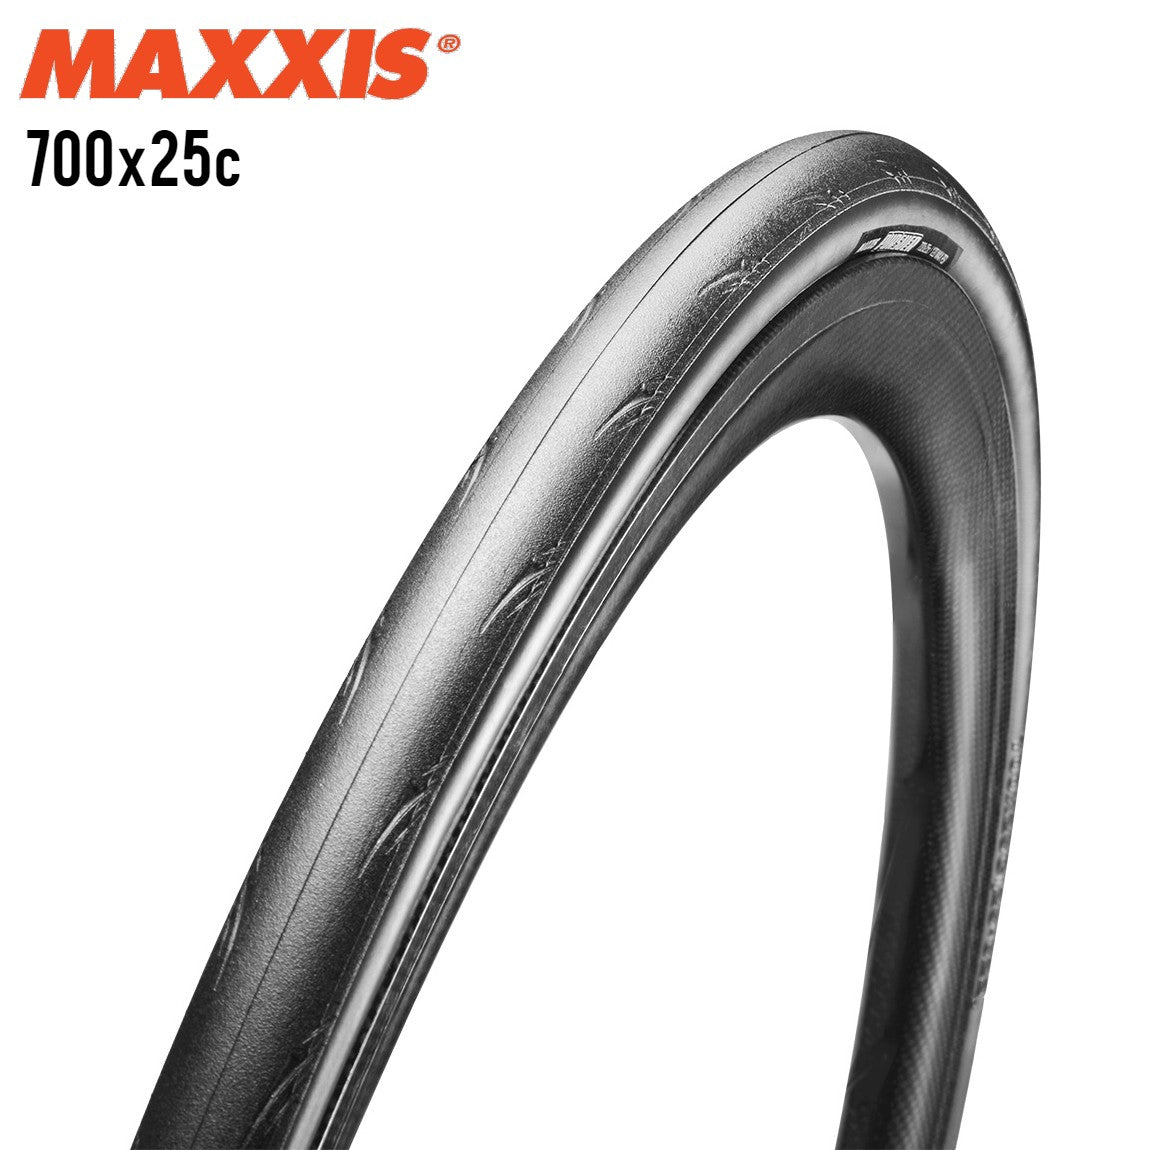 Maxxis Pursuer Road Bike Tire 700c - Black